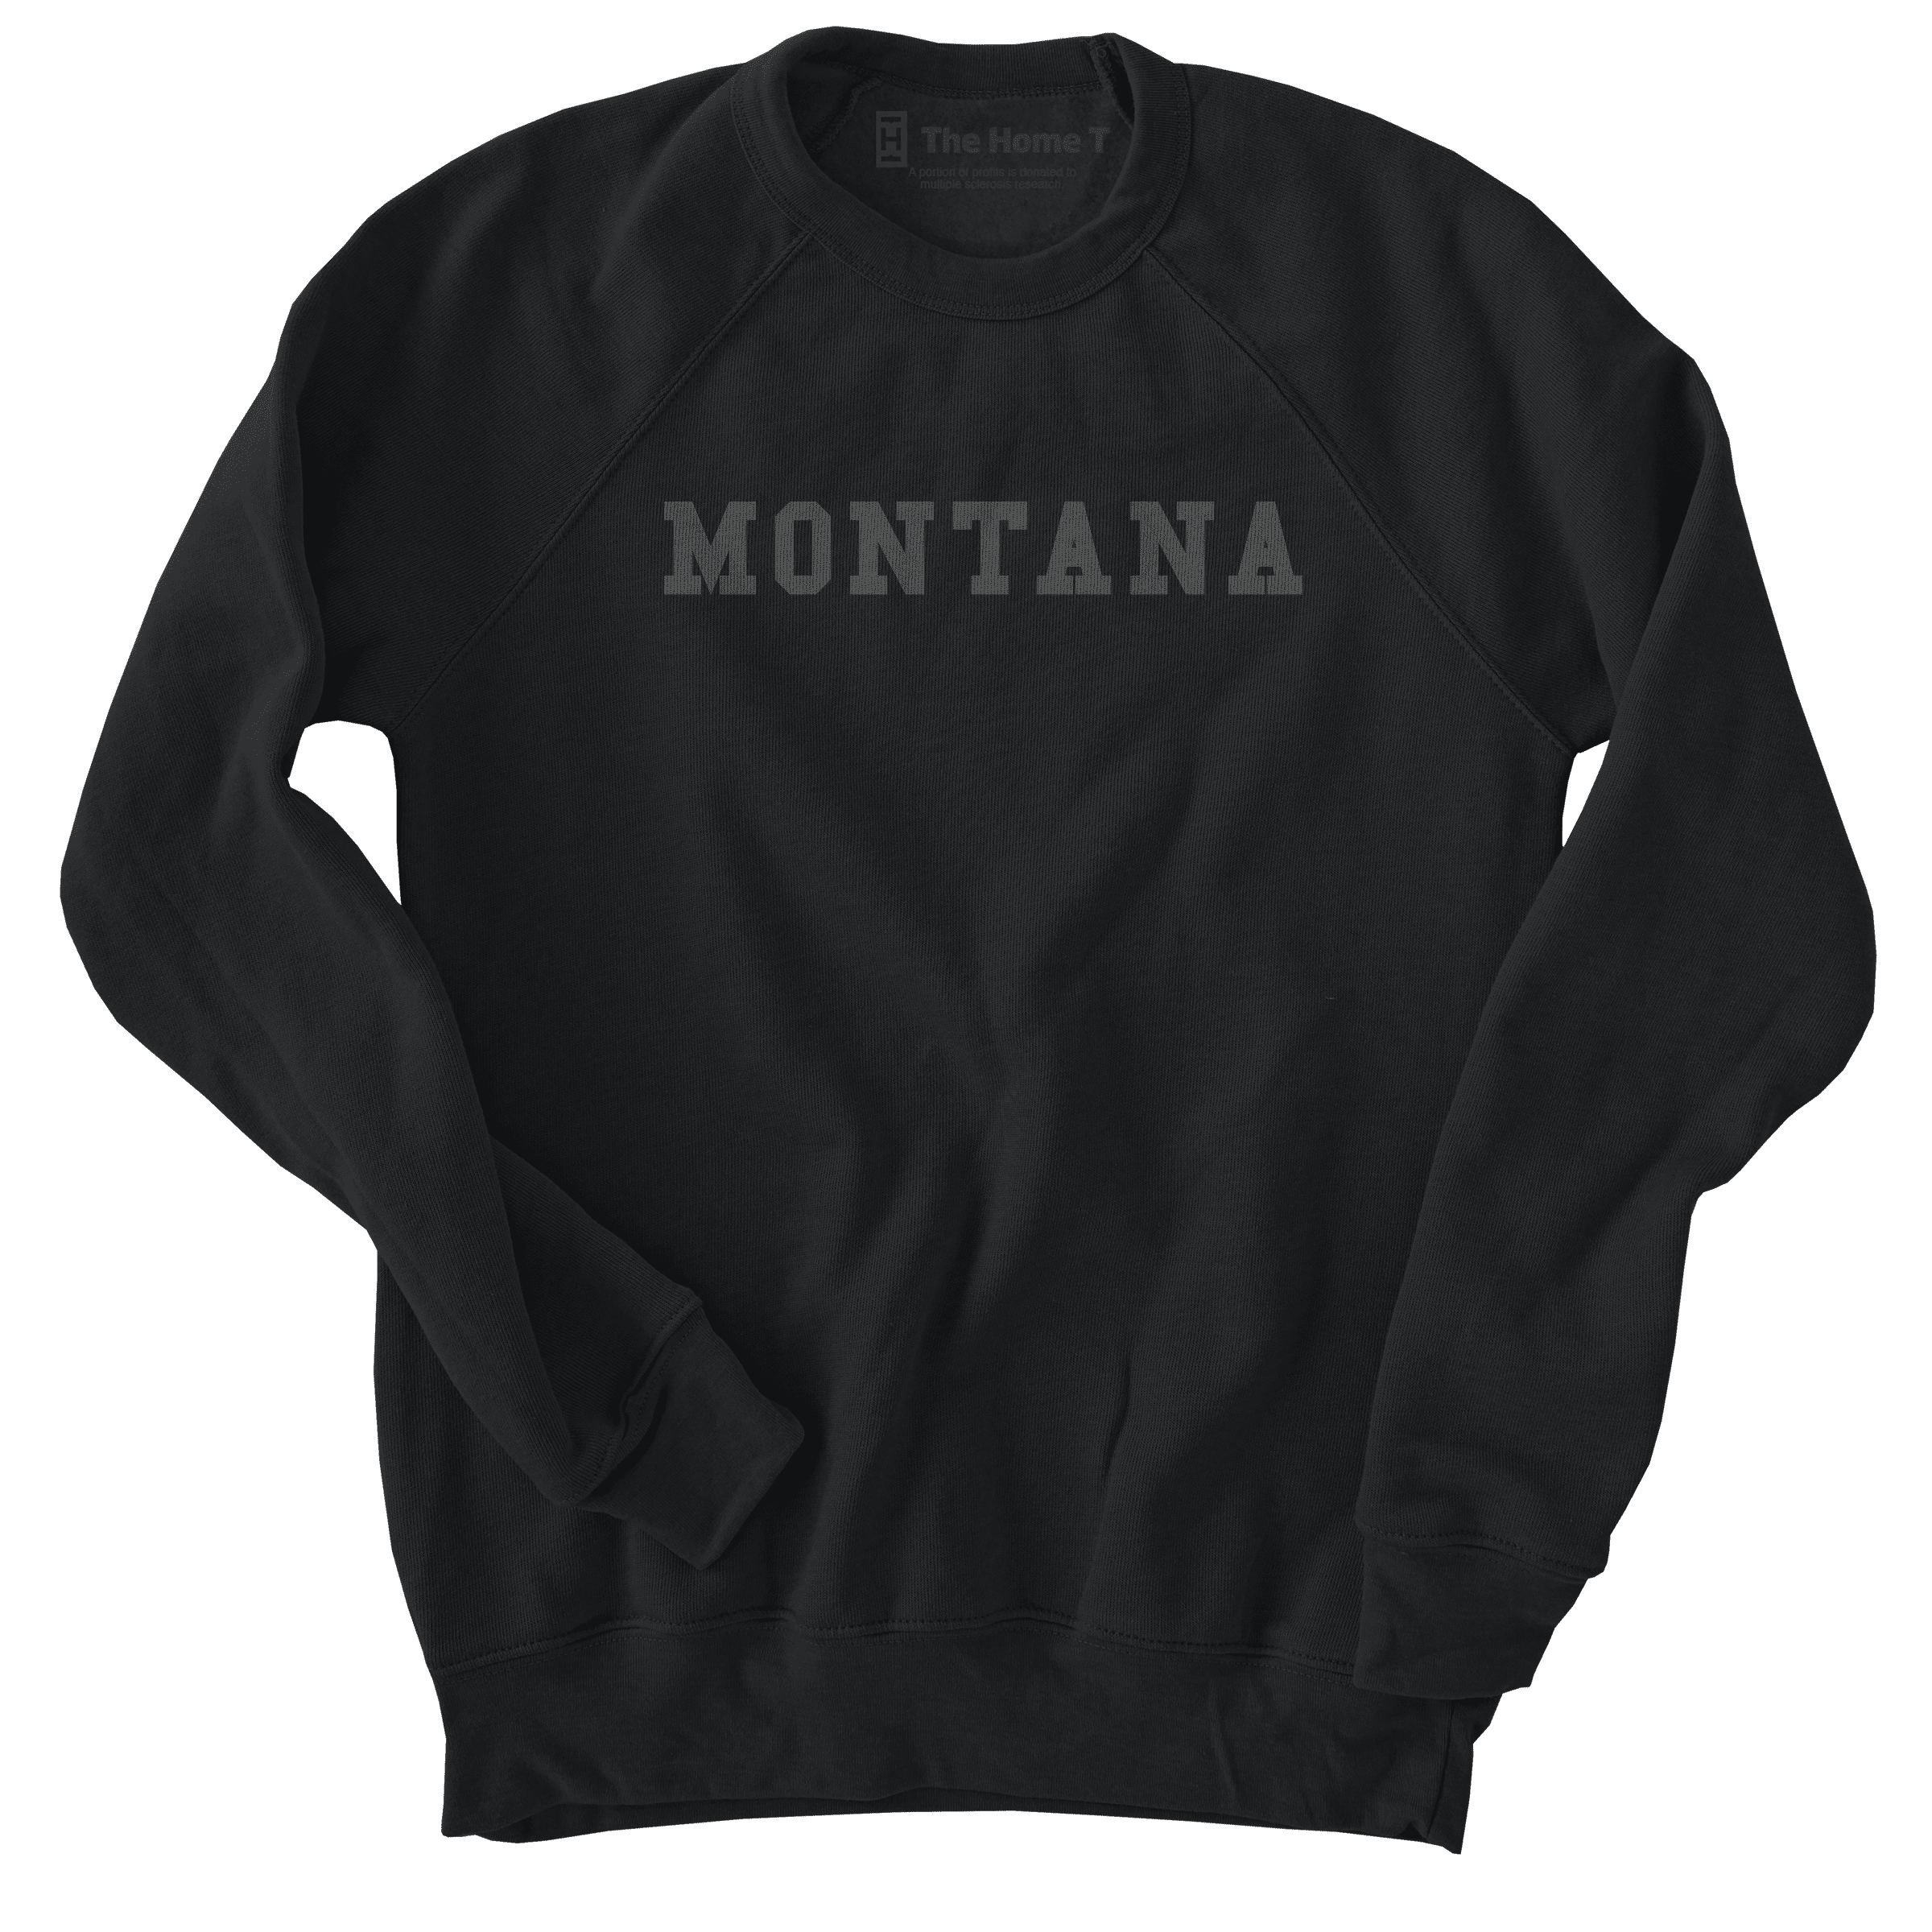 Montana Black on Black